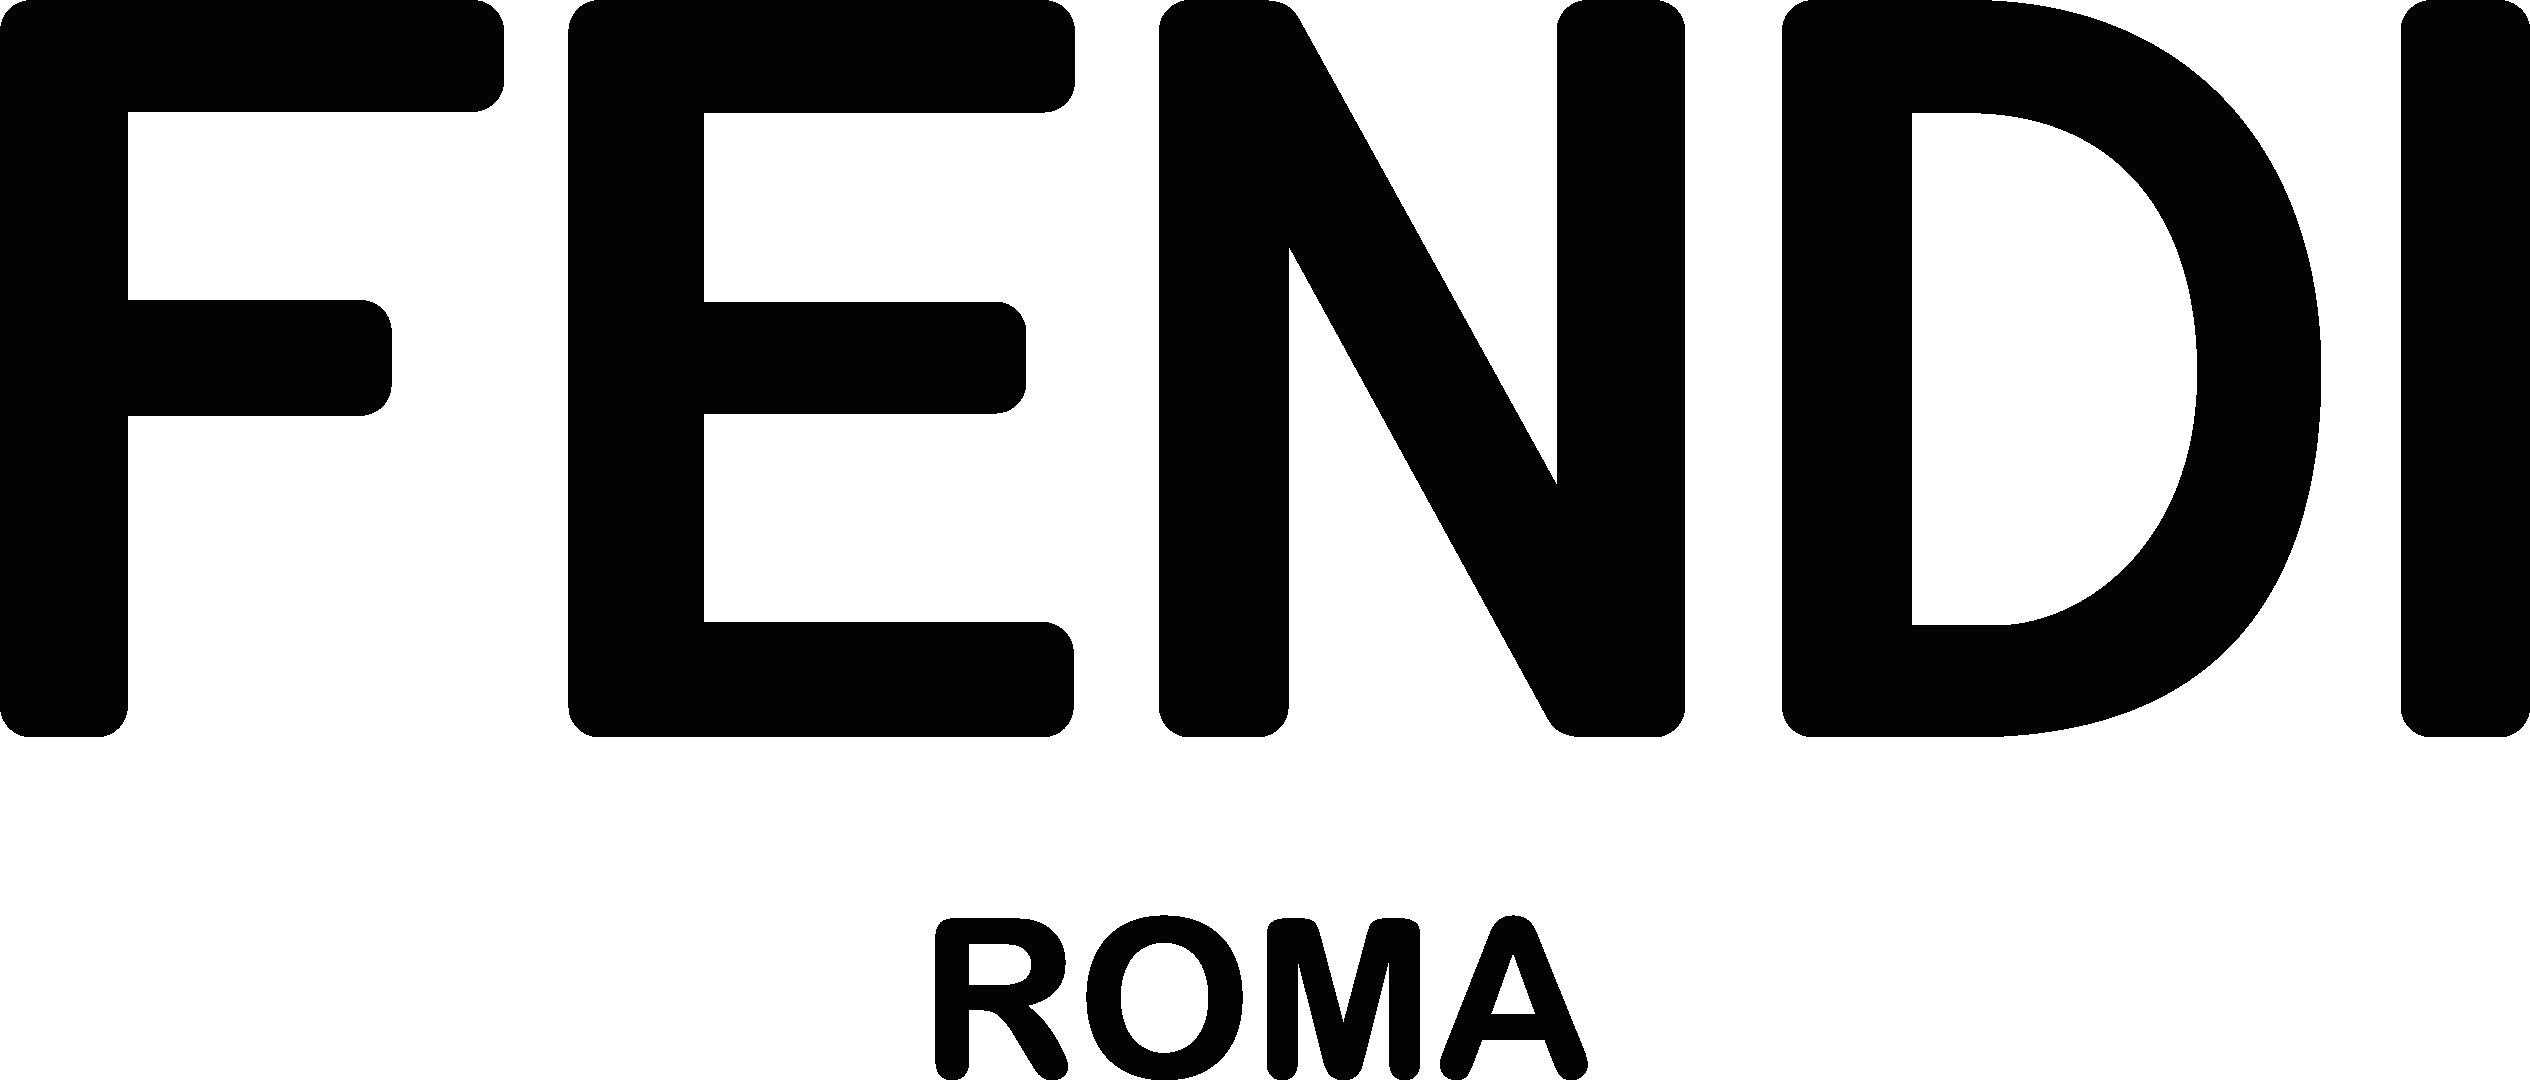 Fendi Logo Download Vector